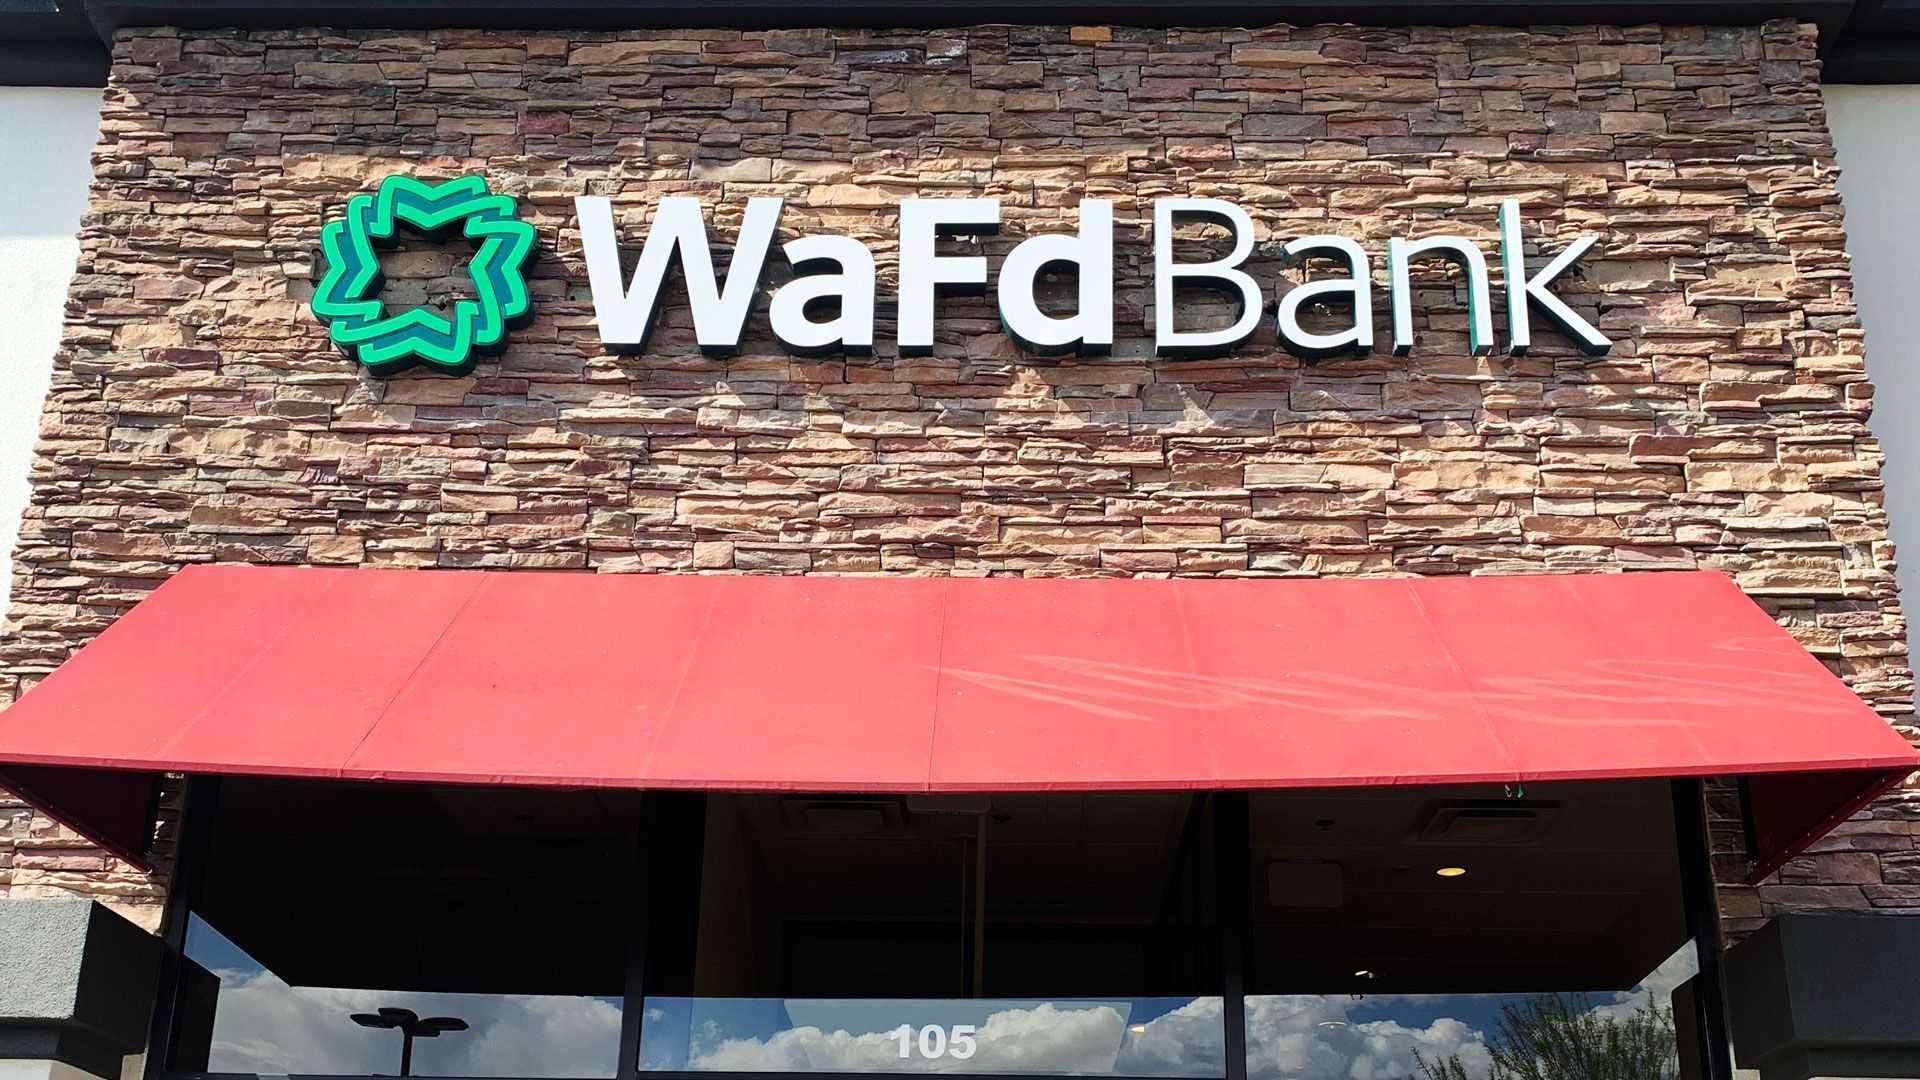 WaFd Bank in Las Vegas, Nevada #1400 - Washington Federal.